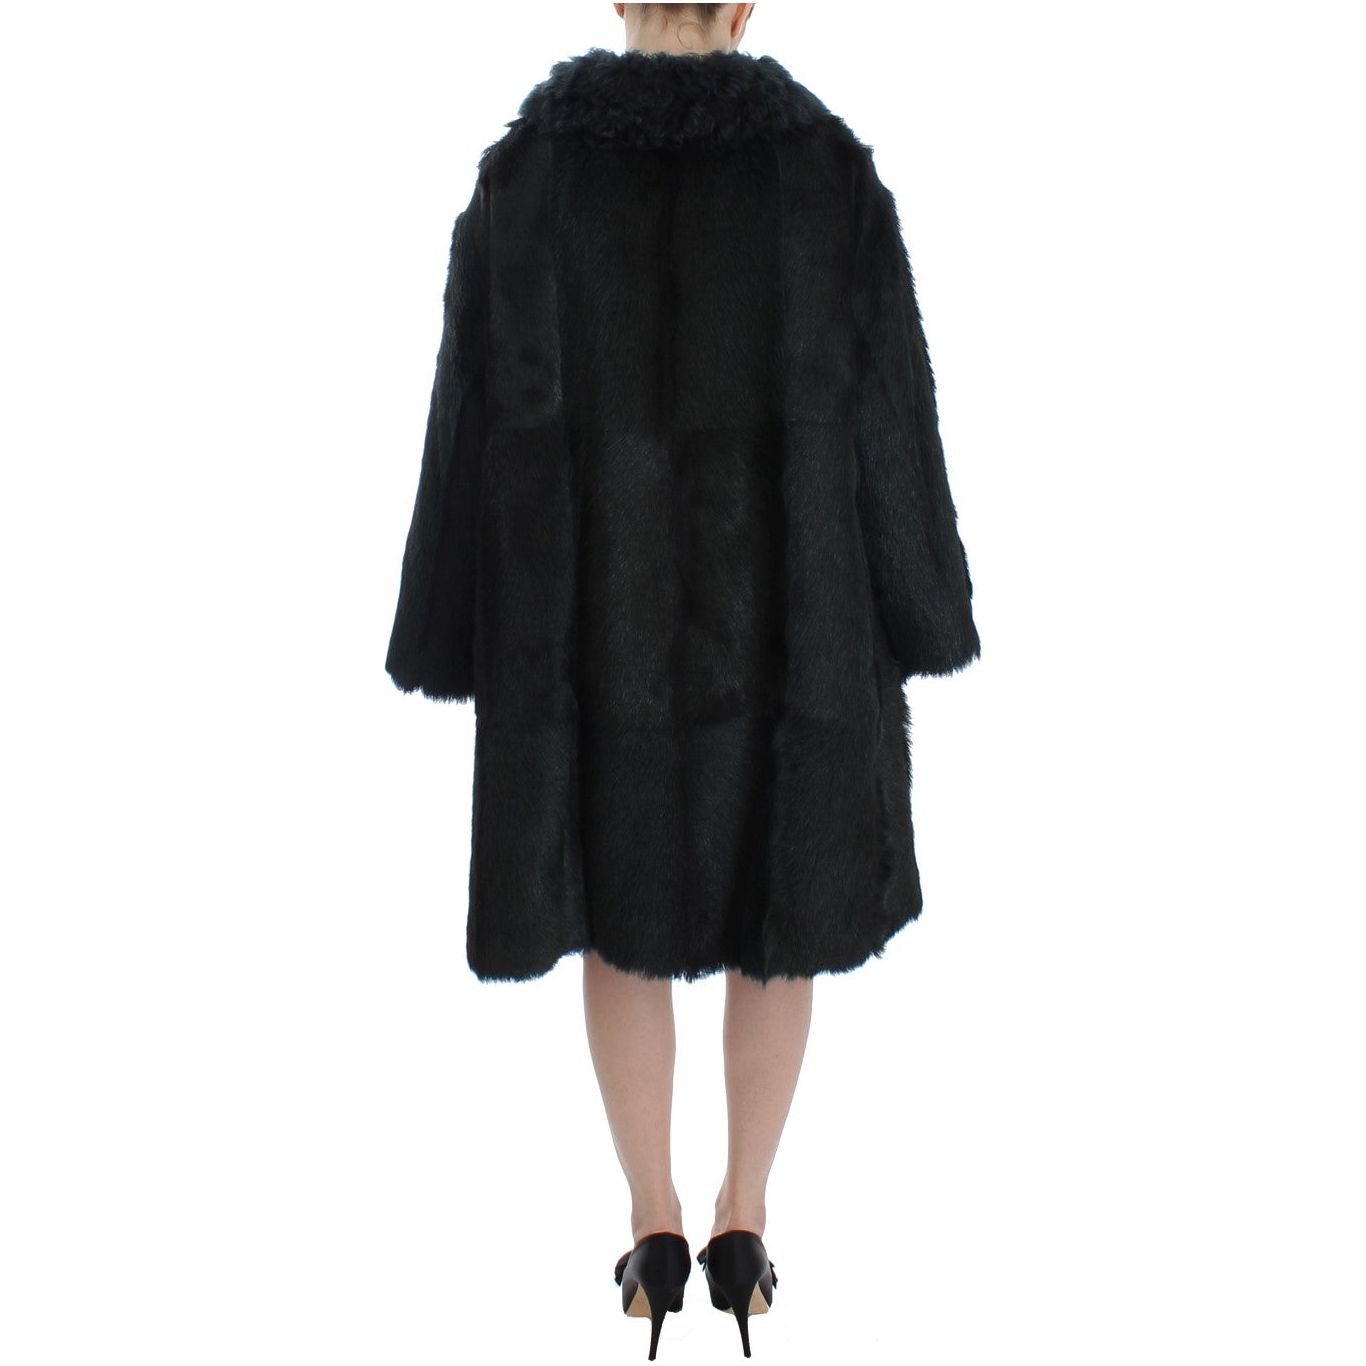 Dolce & Gabbana Exquisite Shearling Coat Jacket black-goat-fur-shearling-long-jacket-coat 62390-black-goat-fur-shearling-long-jacket-coat-3.jpg